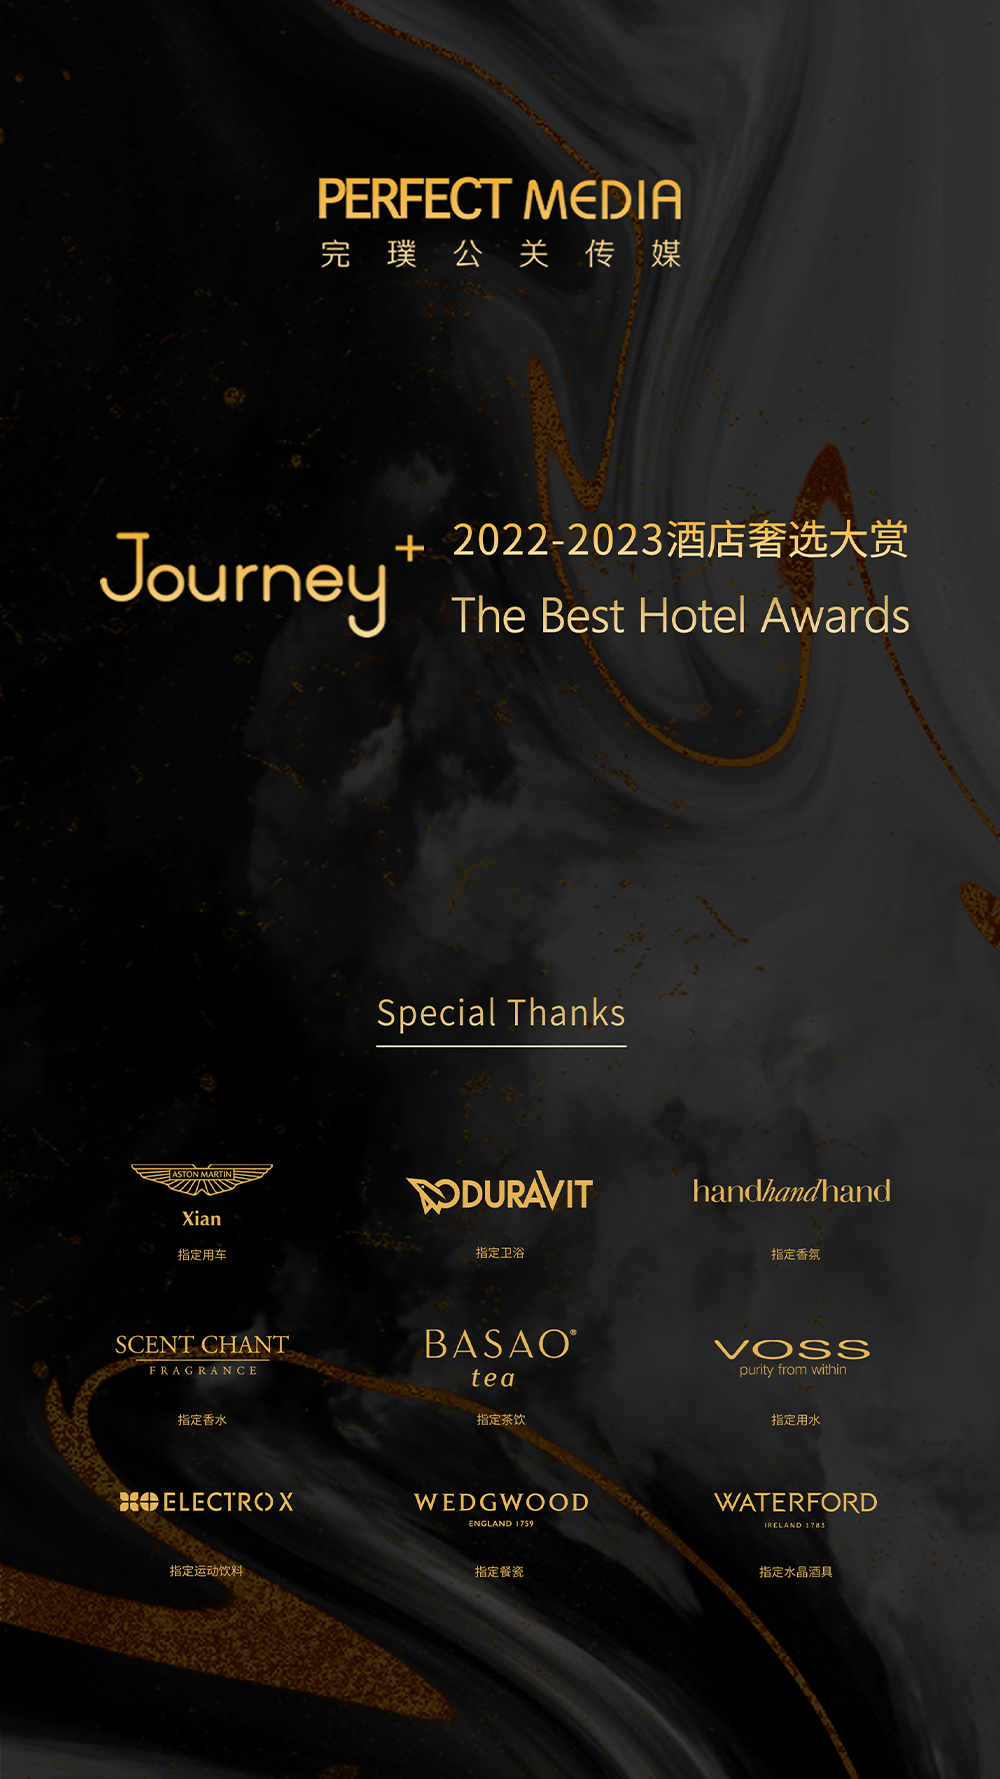 Journey+2022-2023酒店奢选大赏年度榜单｜你最向往哪一家？